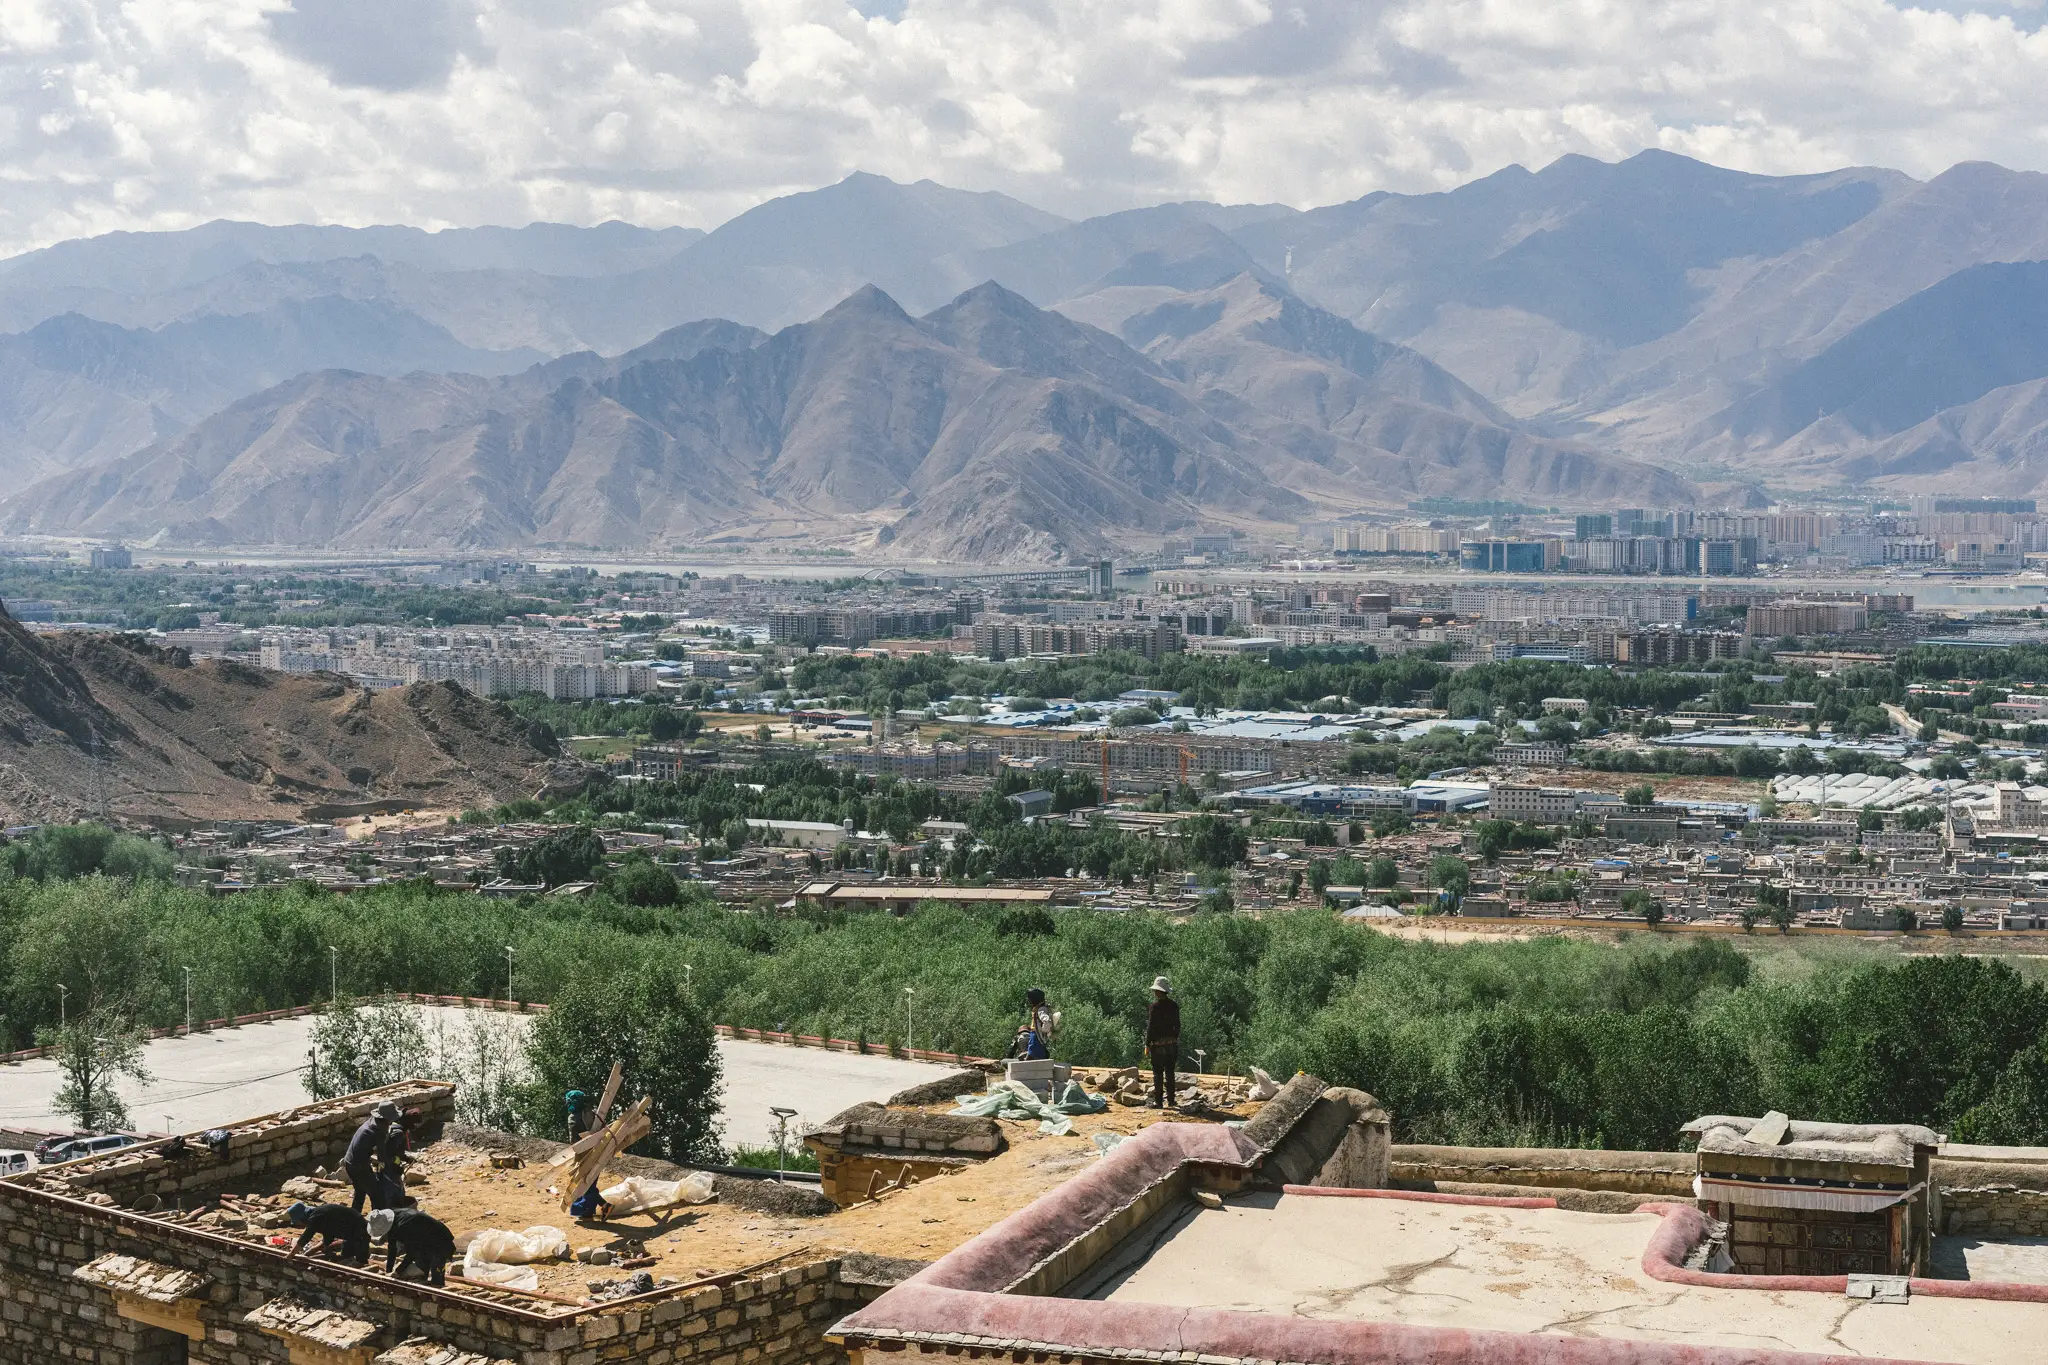 Modern Lhasa, viewed from the Sera Monastery